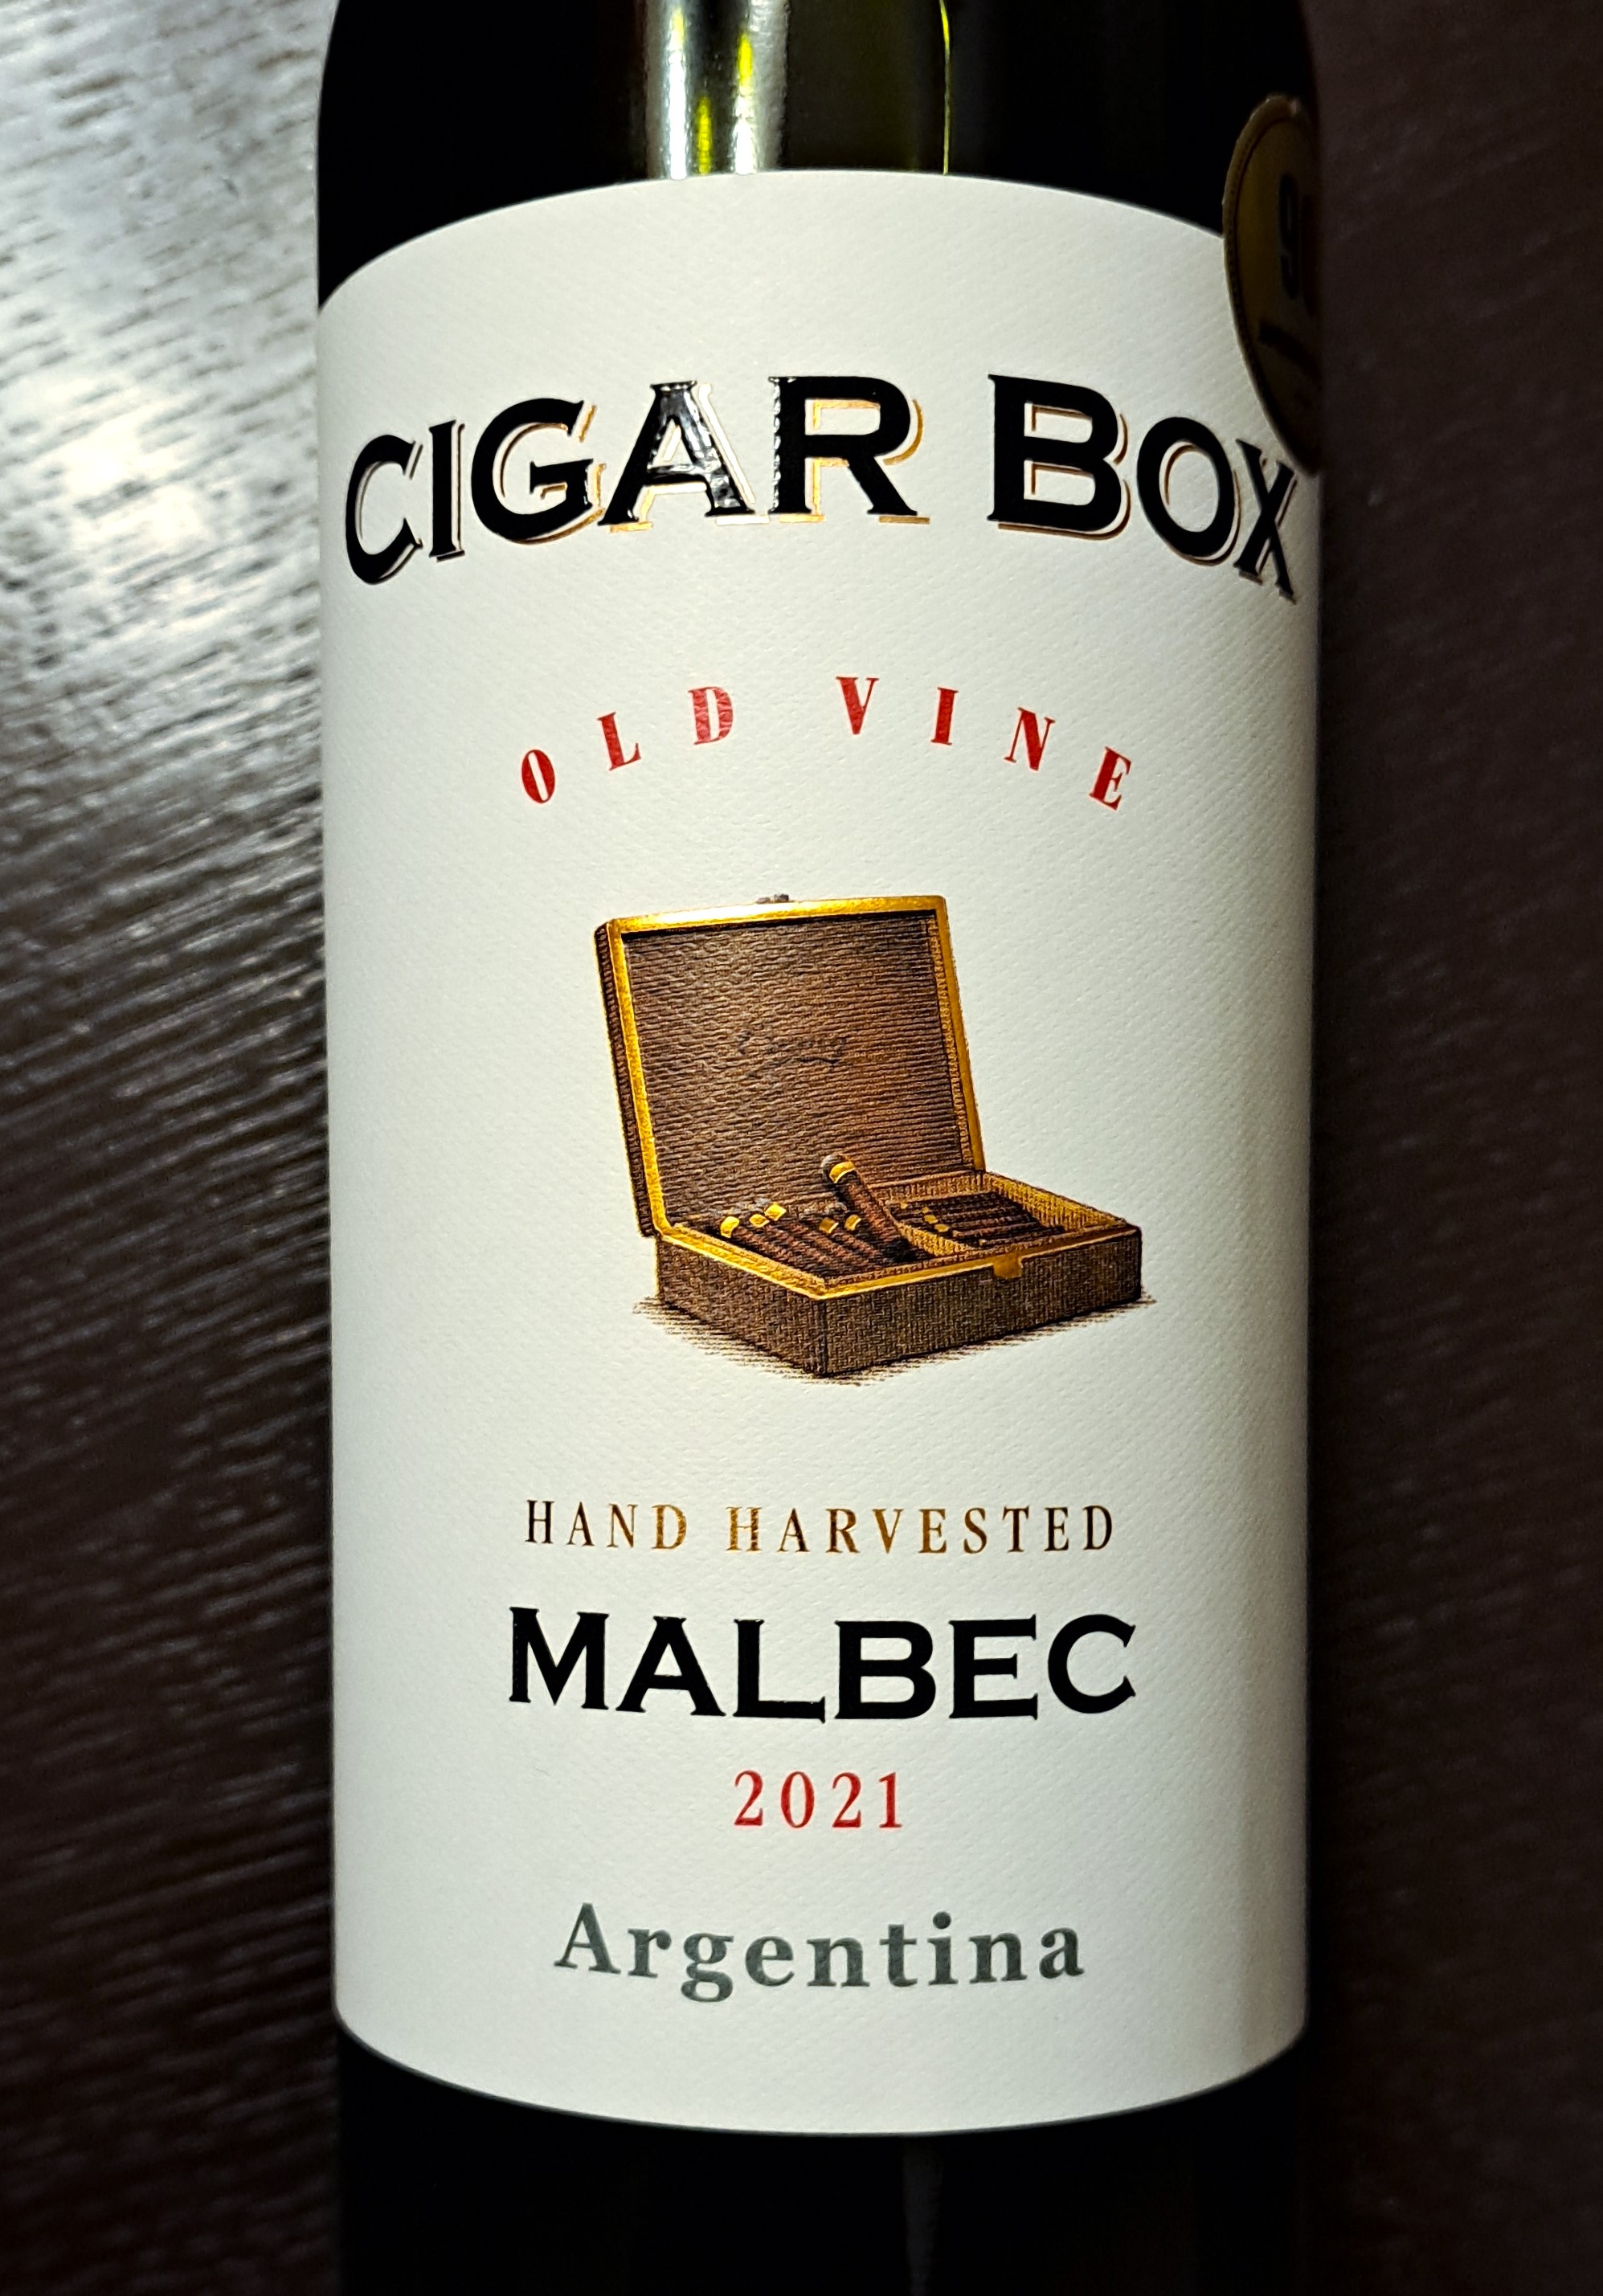 Cigar Box Old Vine - Mendoza Malbec Dona 2021, Enostrada Paula